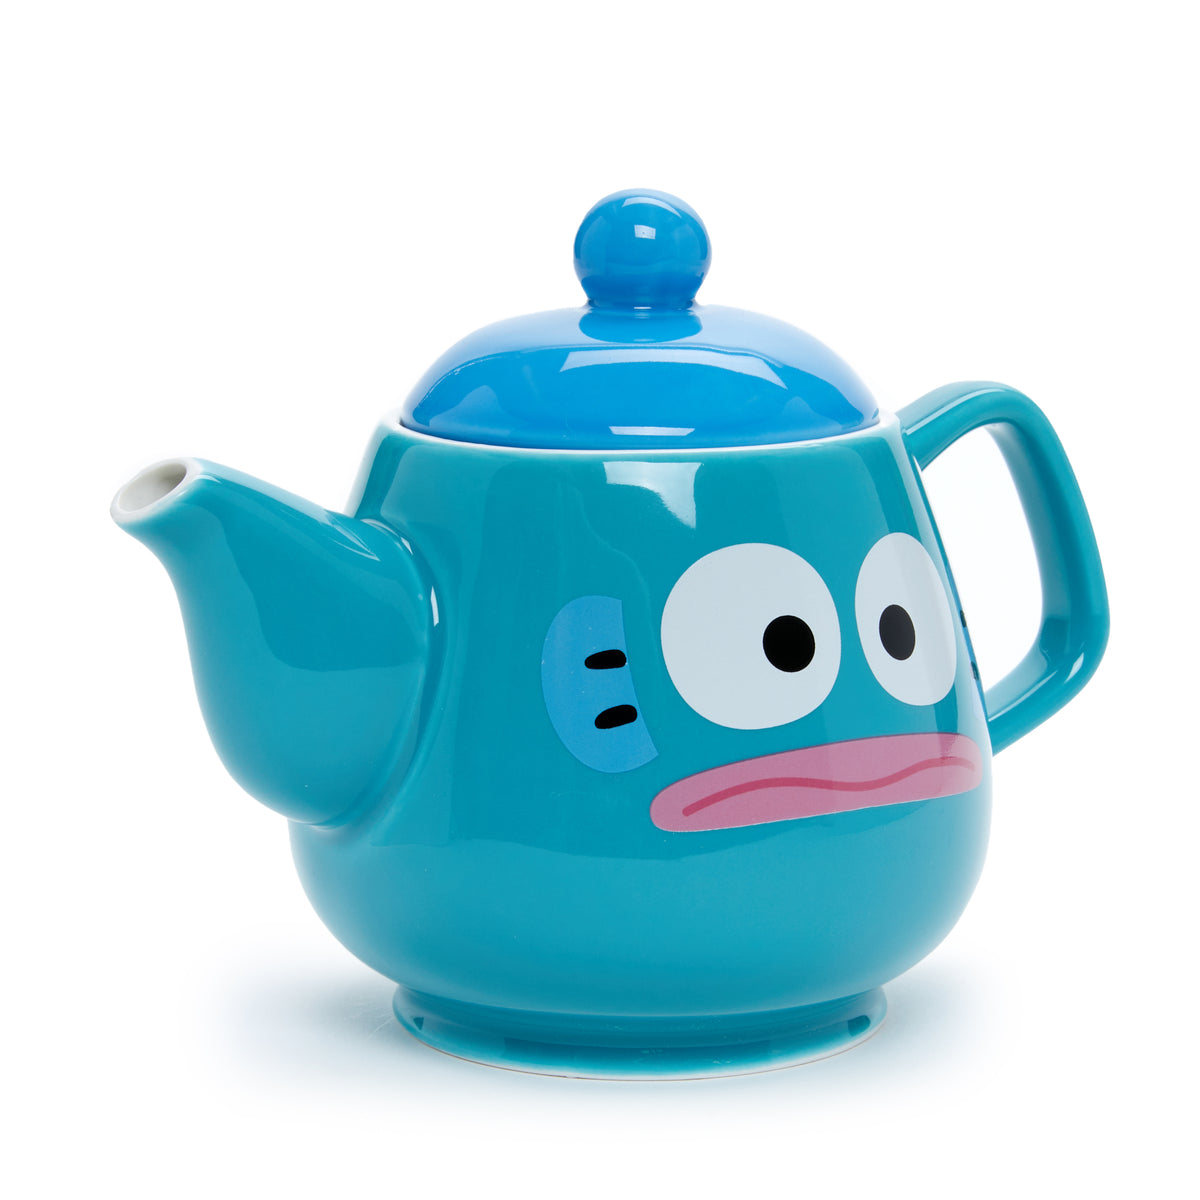 Hangyodon Ceramic Teapot Home Goods Global Original   